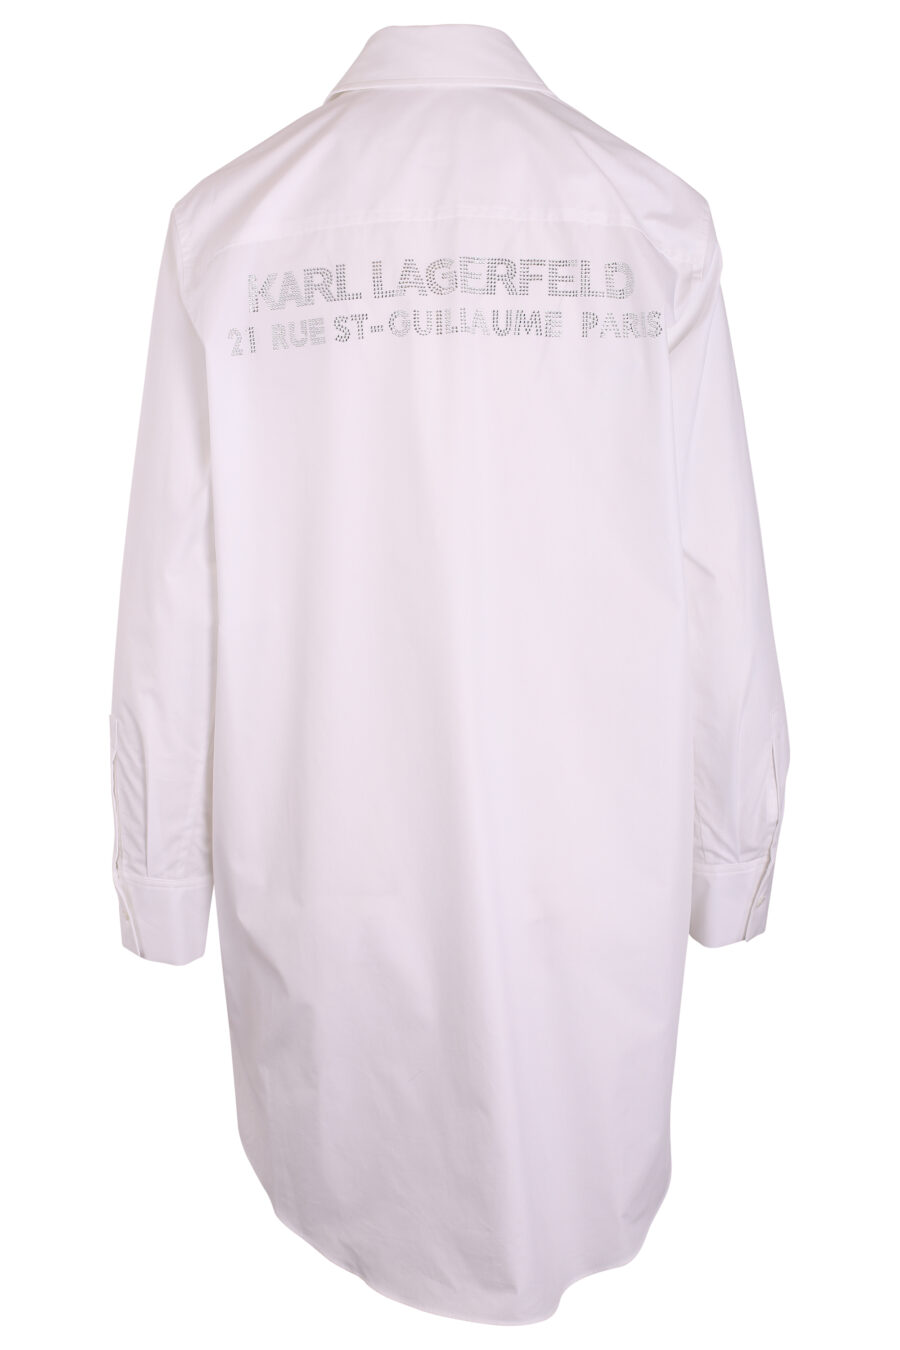 Longue chemise blanche avec logo strass - IMG 3424